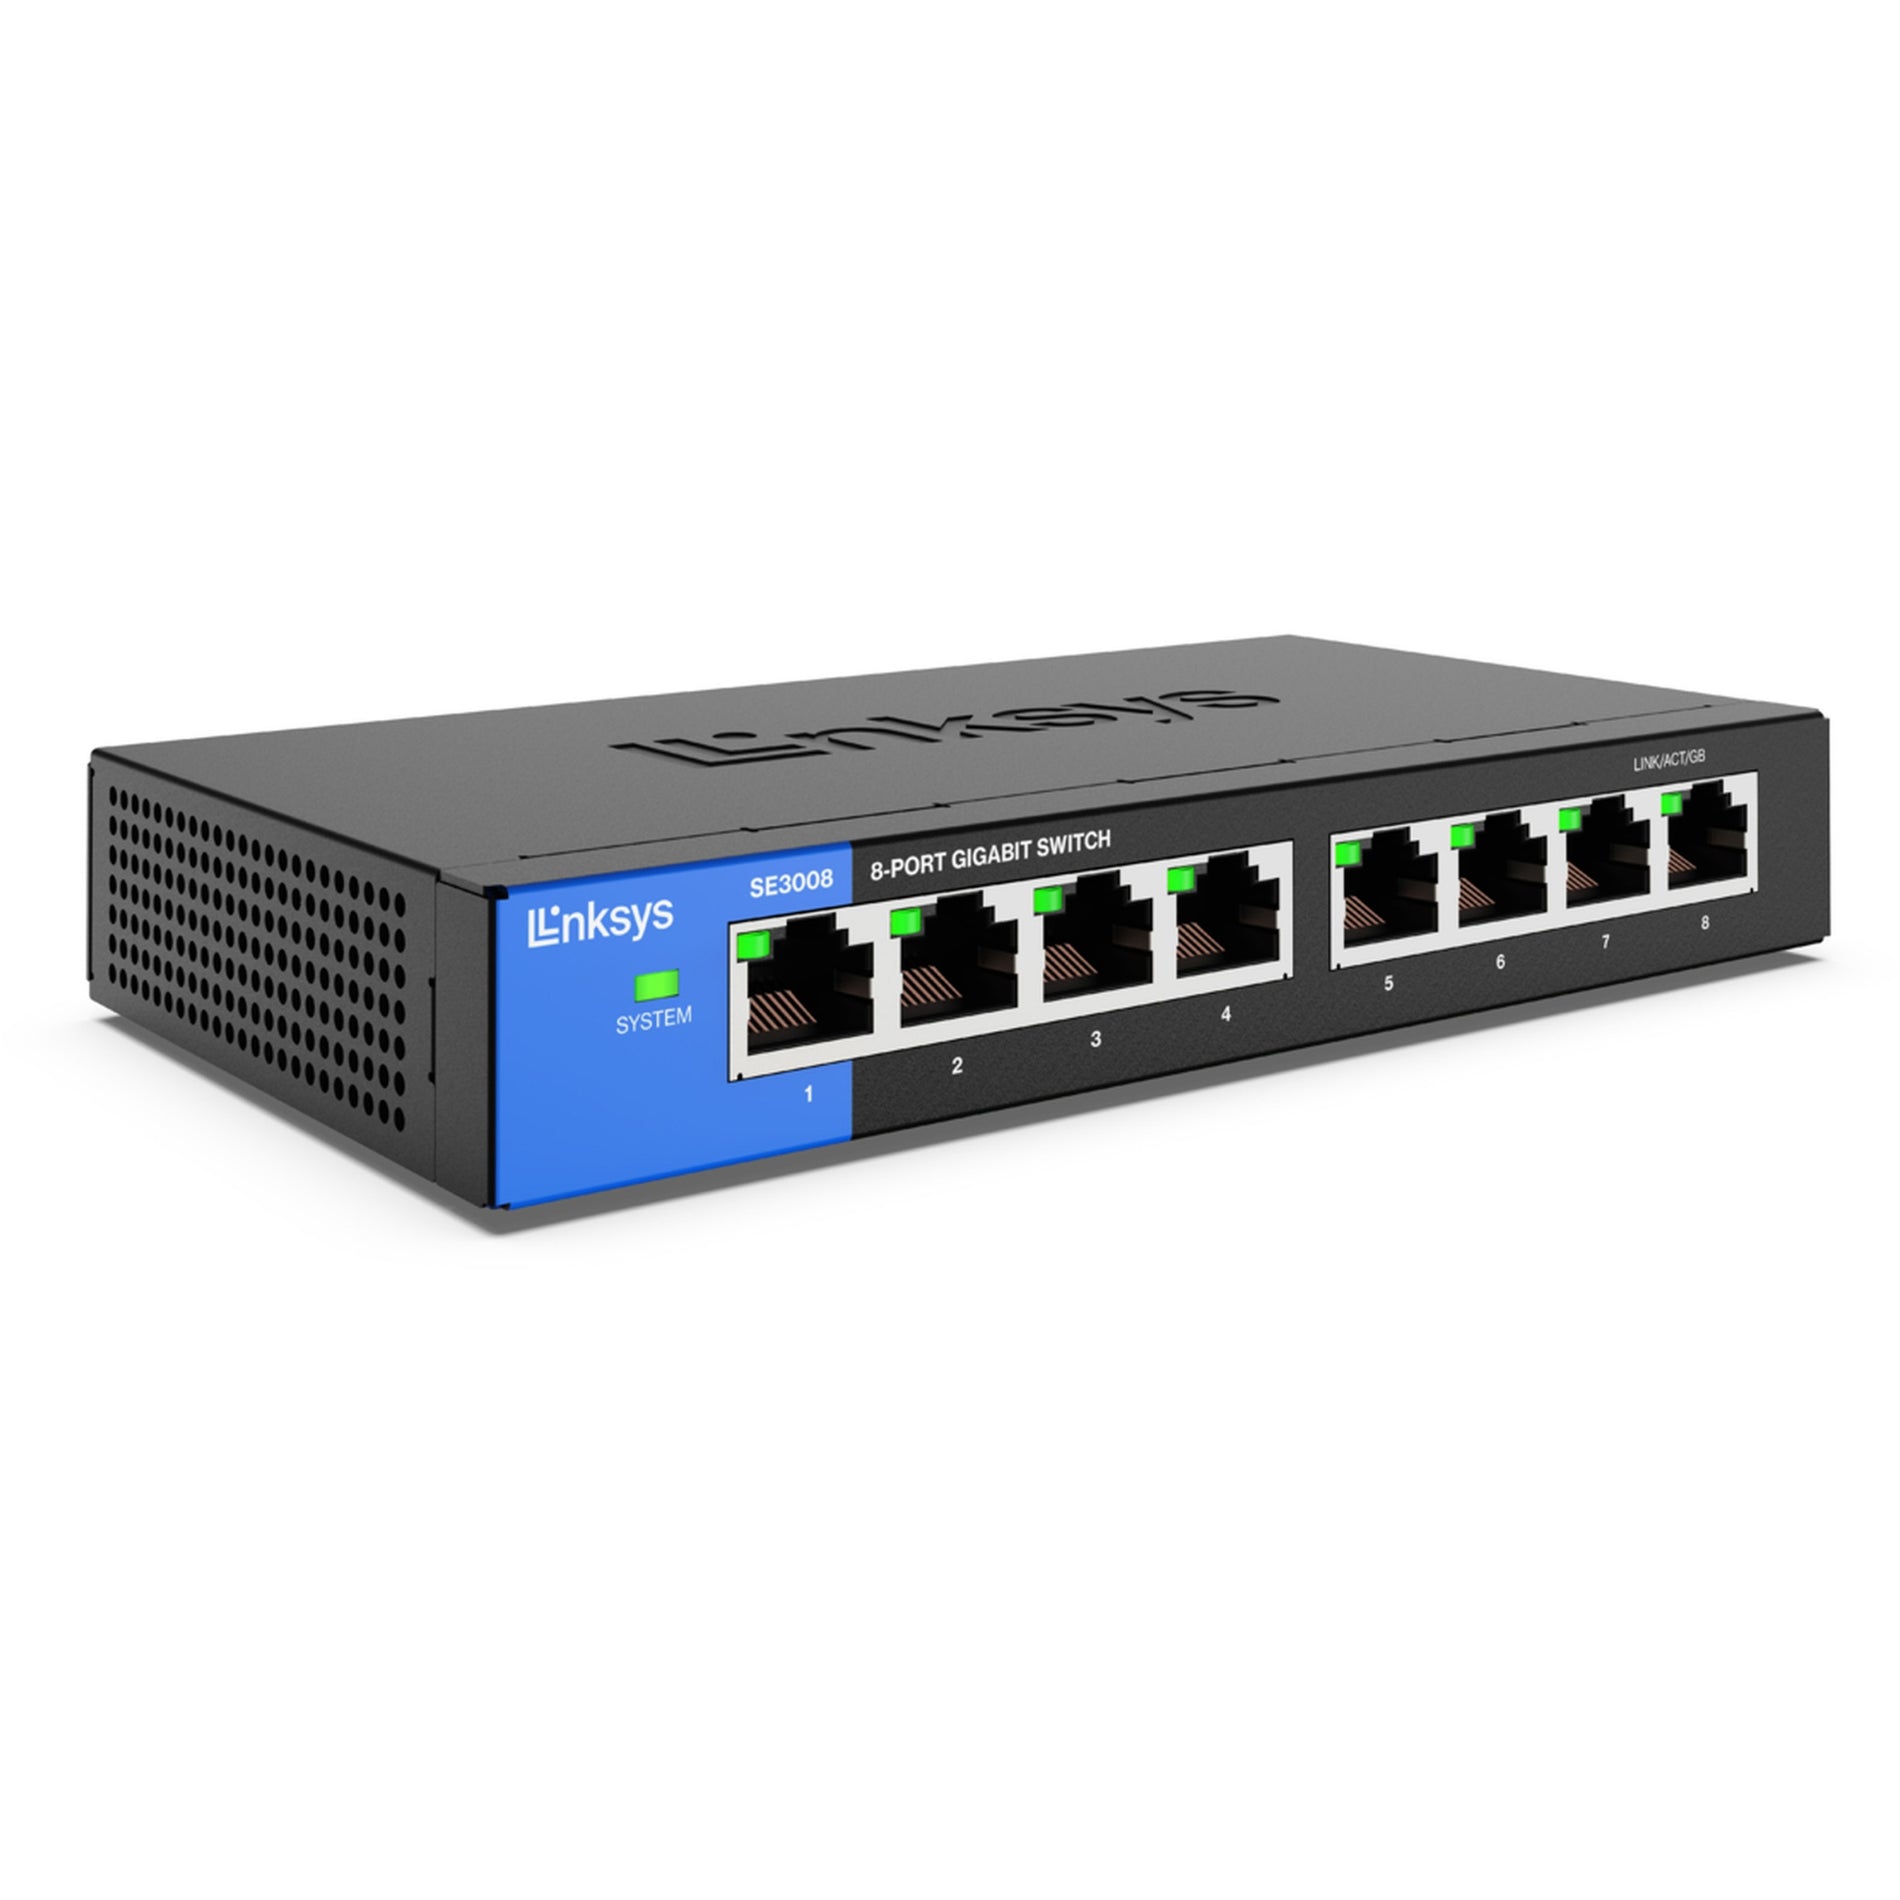 Linksys 8-Port Gigabit Ethernet Switch (SE3008)